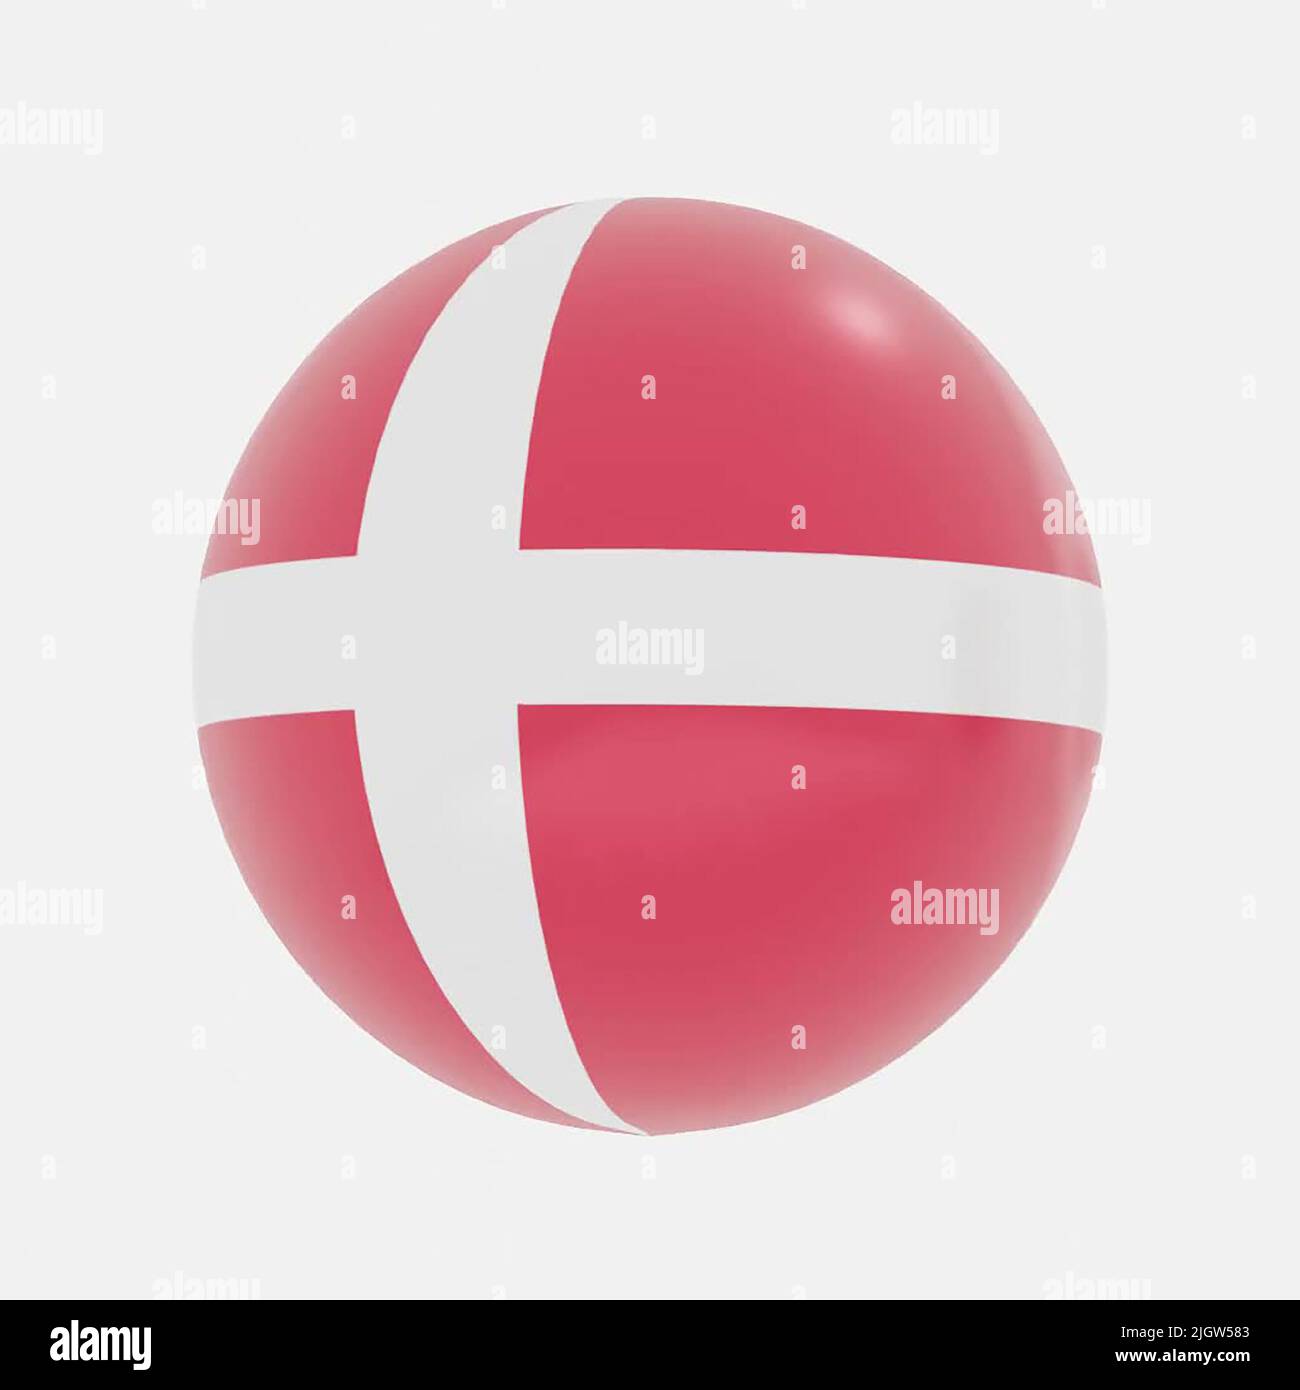 3d render of globe in Denmark flag for icon or symbol. Stock Photo